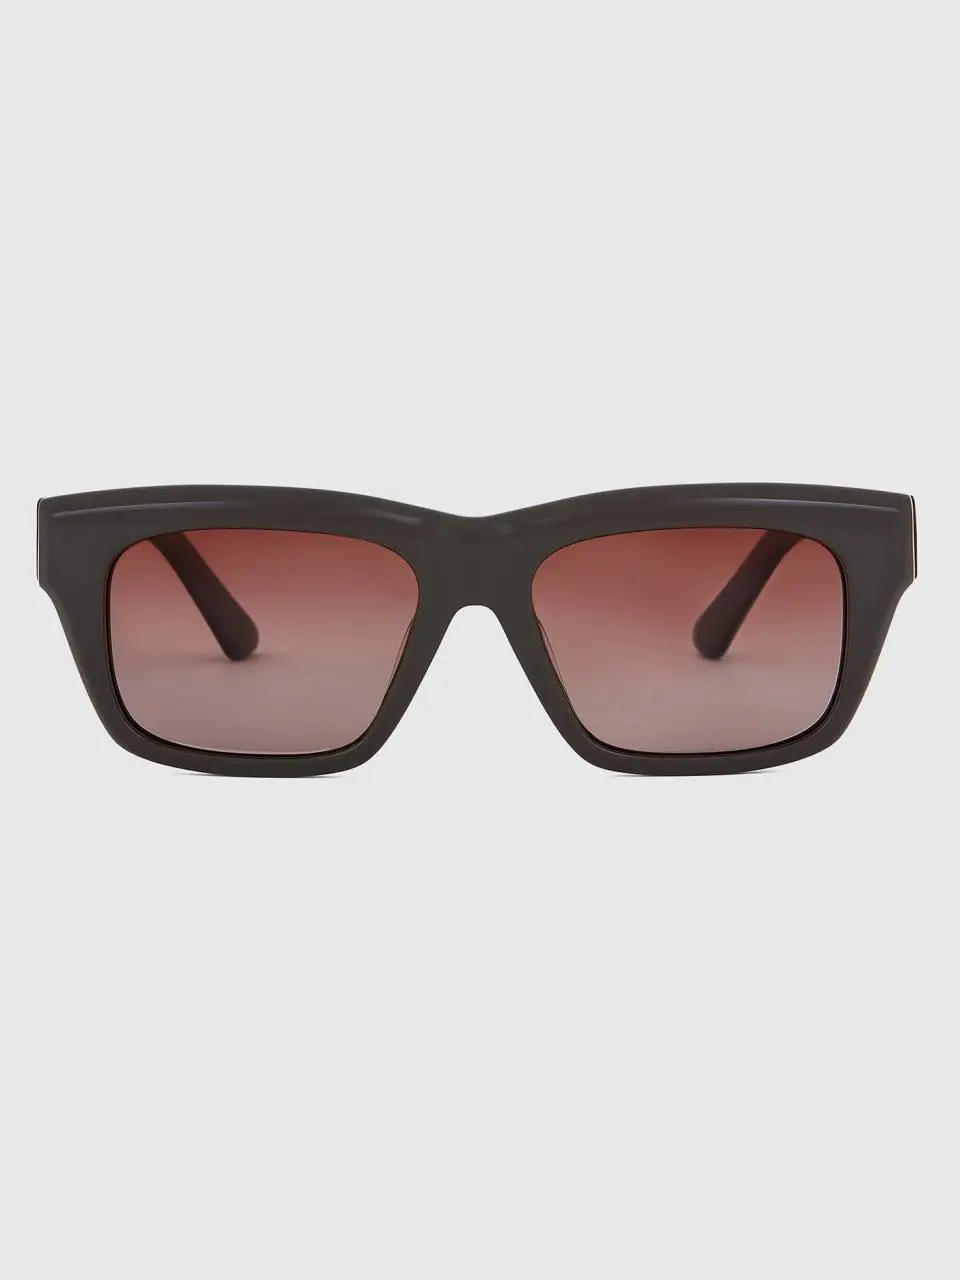 Benetton dark brown sunglasses. 1